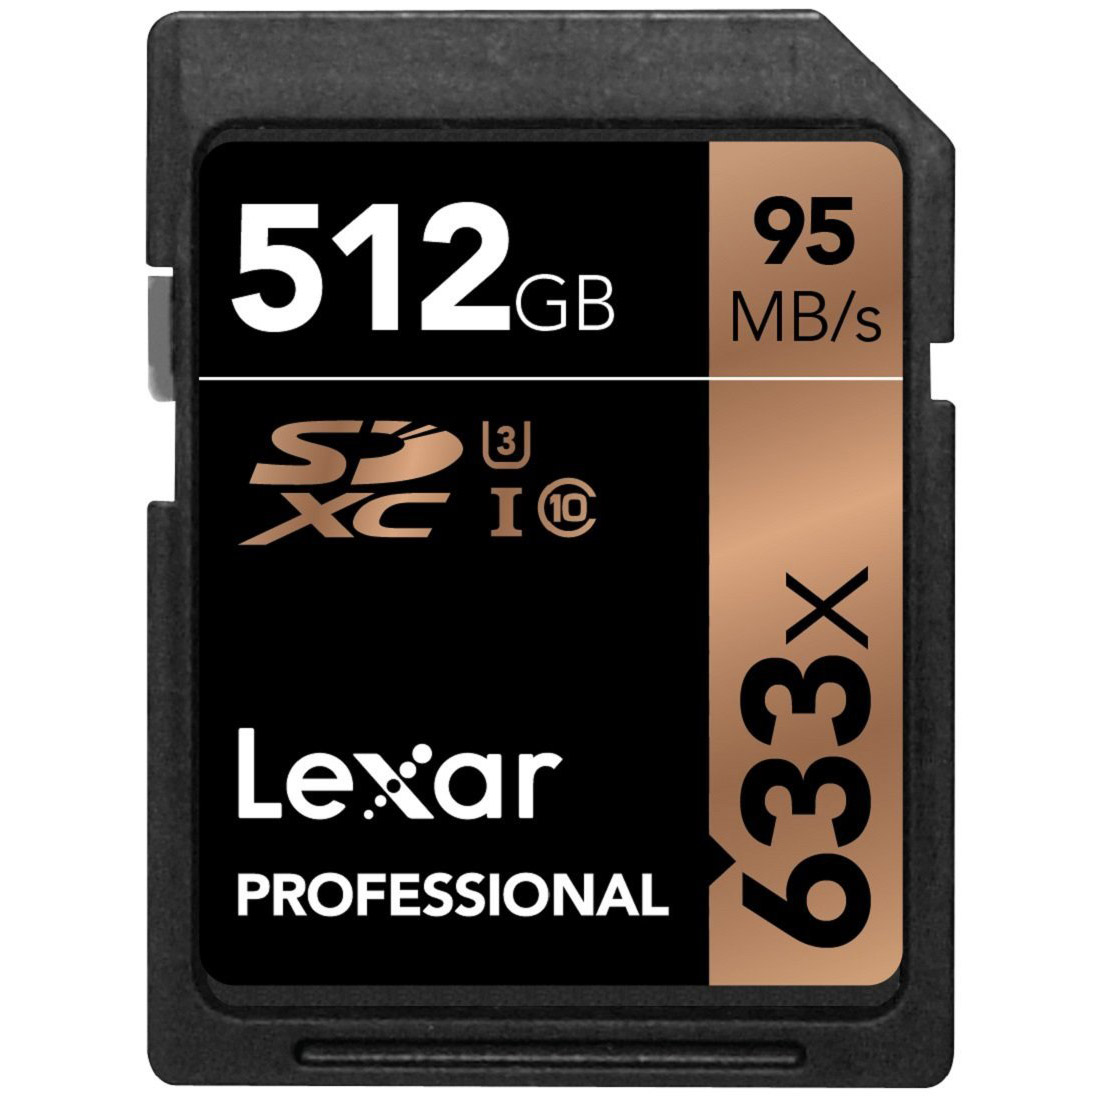 TARJETA SD 512 GB LEXAR (95 MB/S 633X) 4K UHS-1 (1) V30 LEXAR 